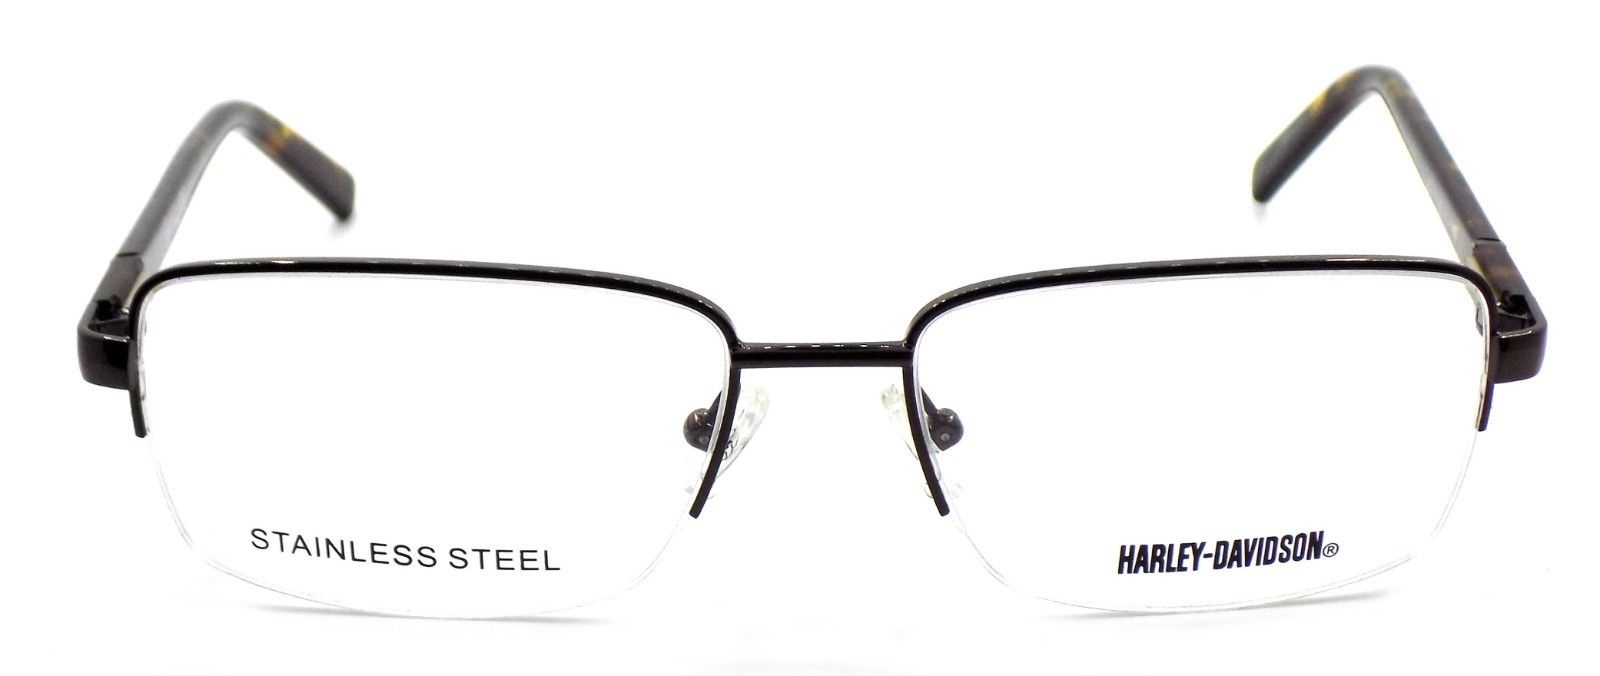 2-Harley Davidson HD0734 048 Men's Half-Rim Eyeglasses Frames 56-17-145 Brown-664689799558-IKSpecs